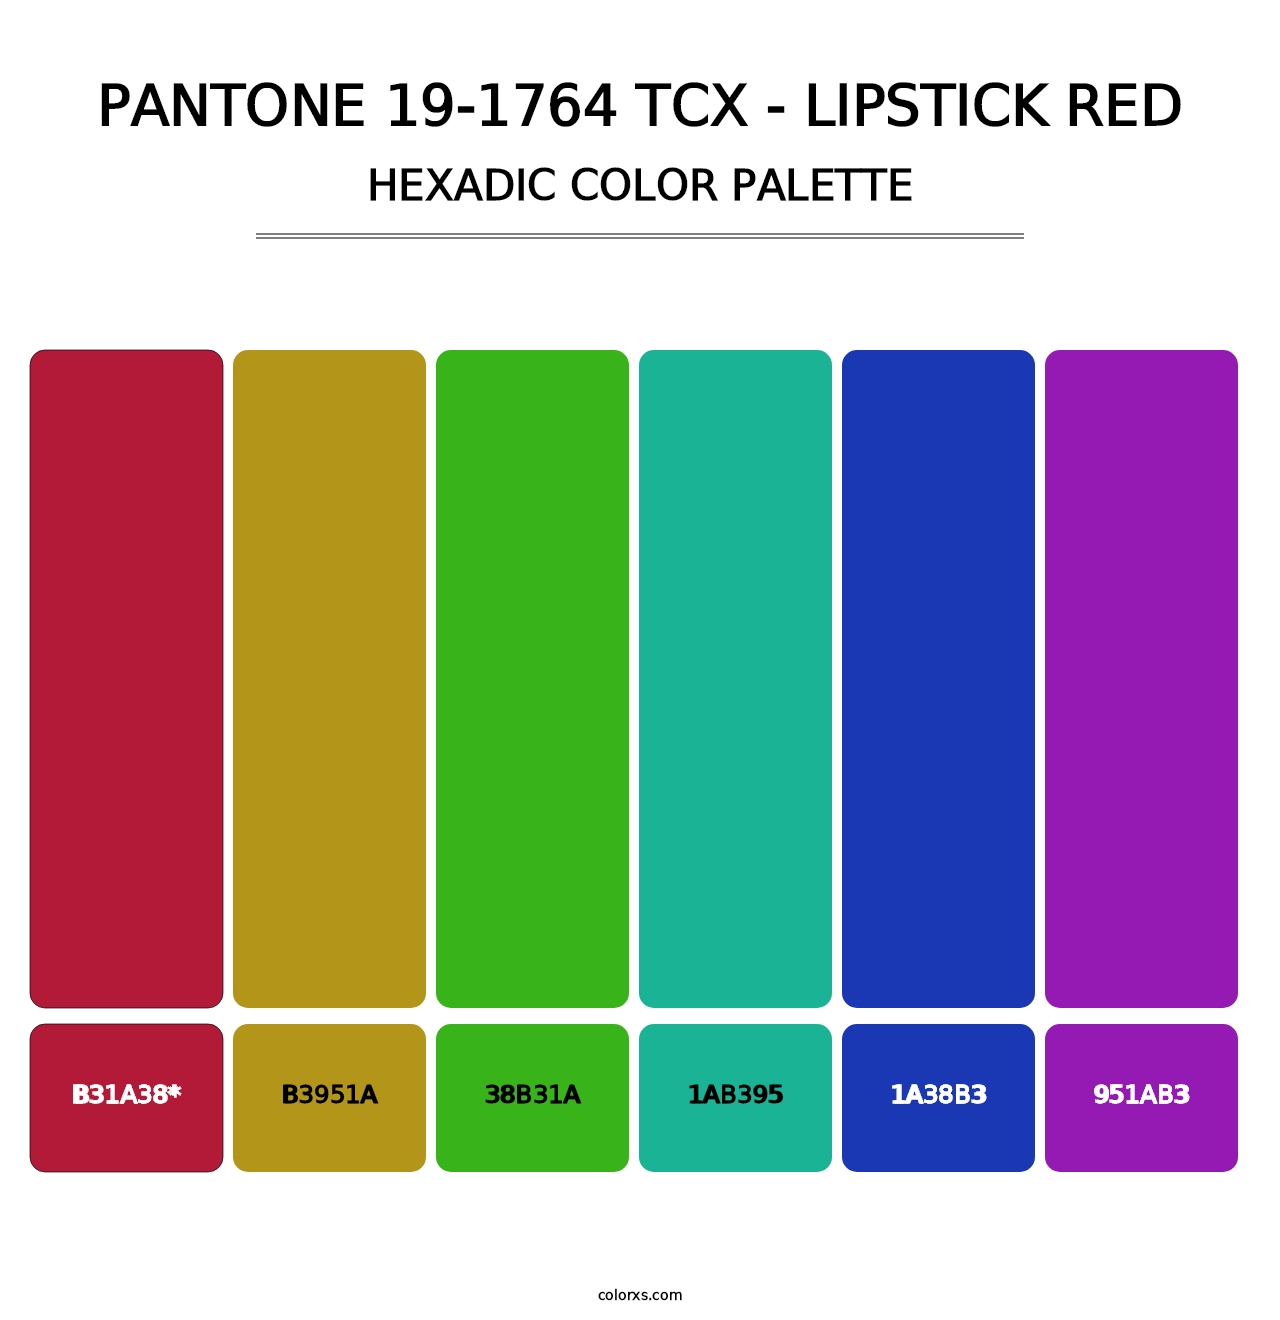 PANTONE 19-1764 TCX - Lipstick Red - Hexadic Color Palette